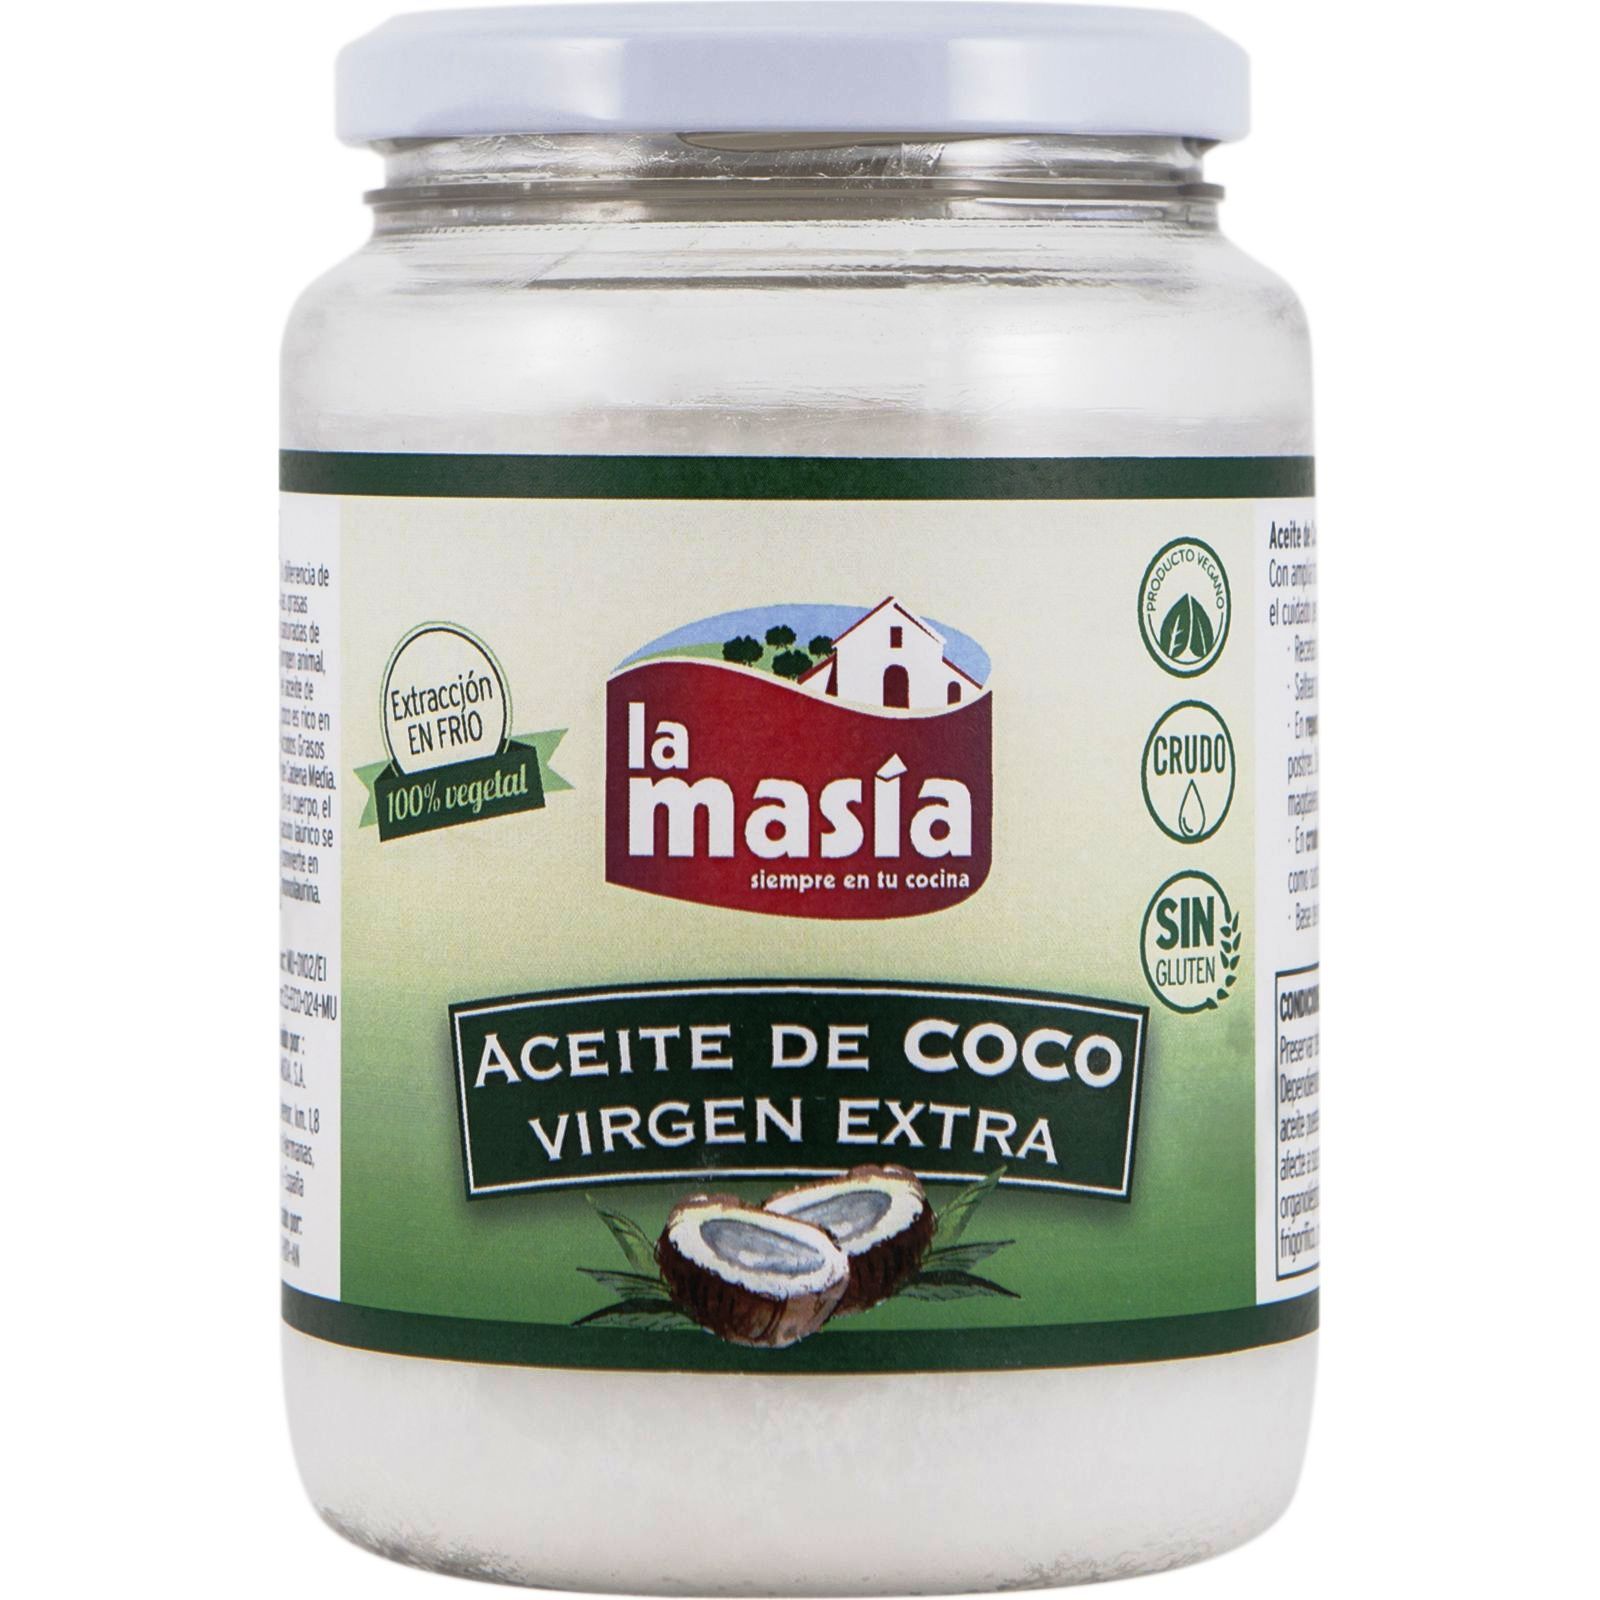 ACEITE COCO VIRGEN EXTRA LA MASIA 375g.